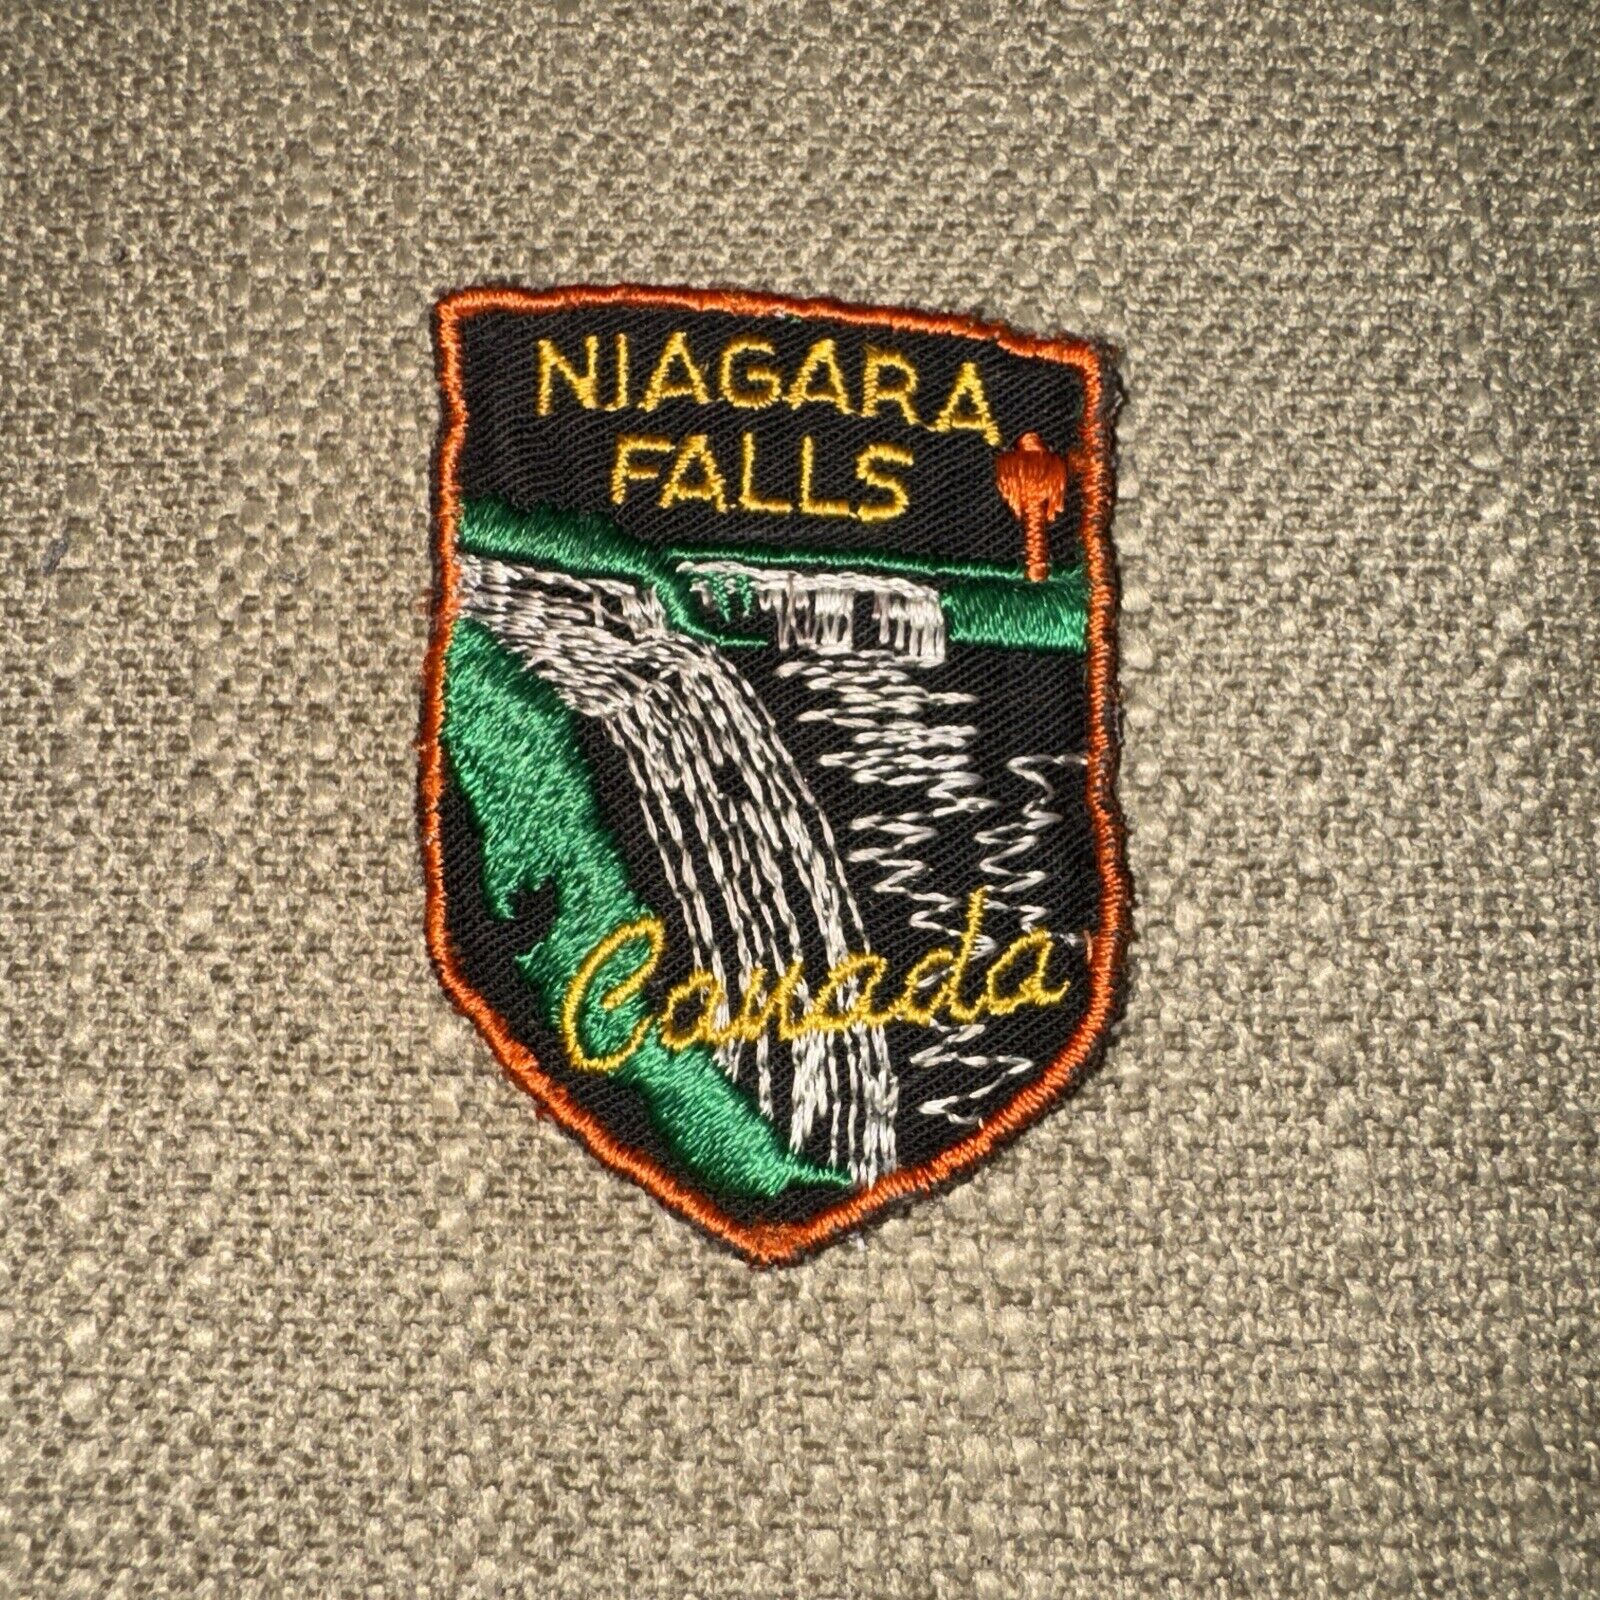 Vintage Niagara Falls Canada Souvenir Patch Embroidered